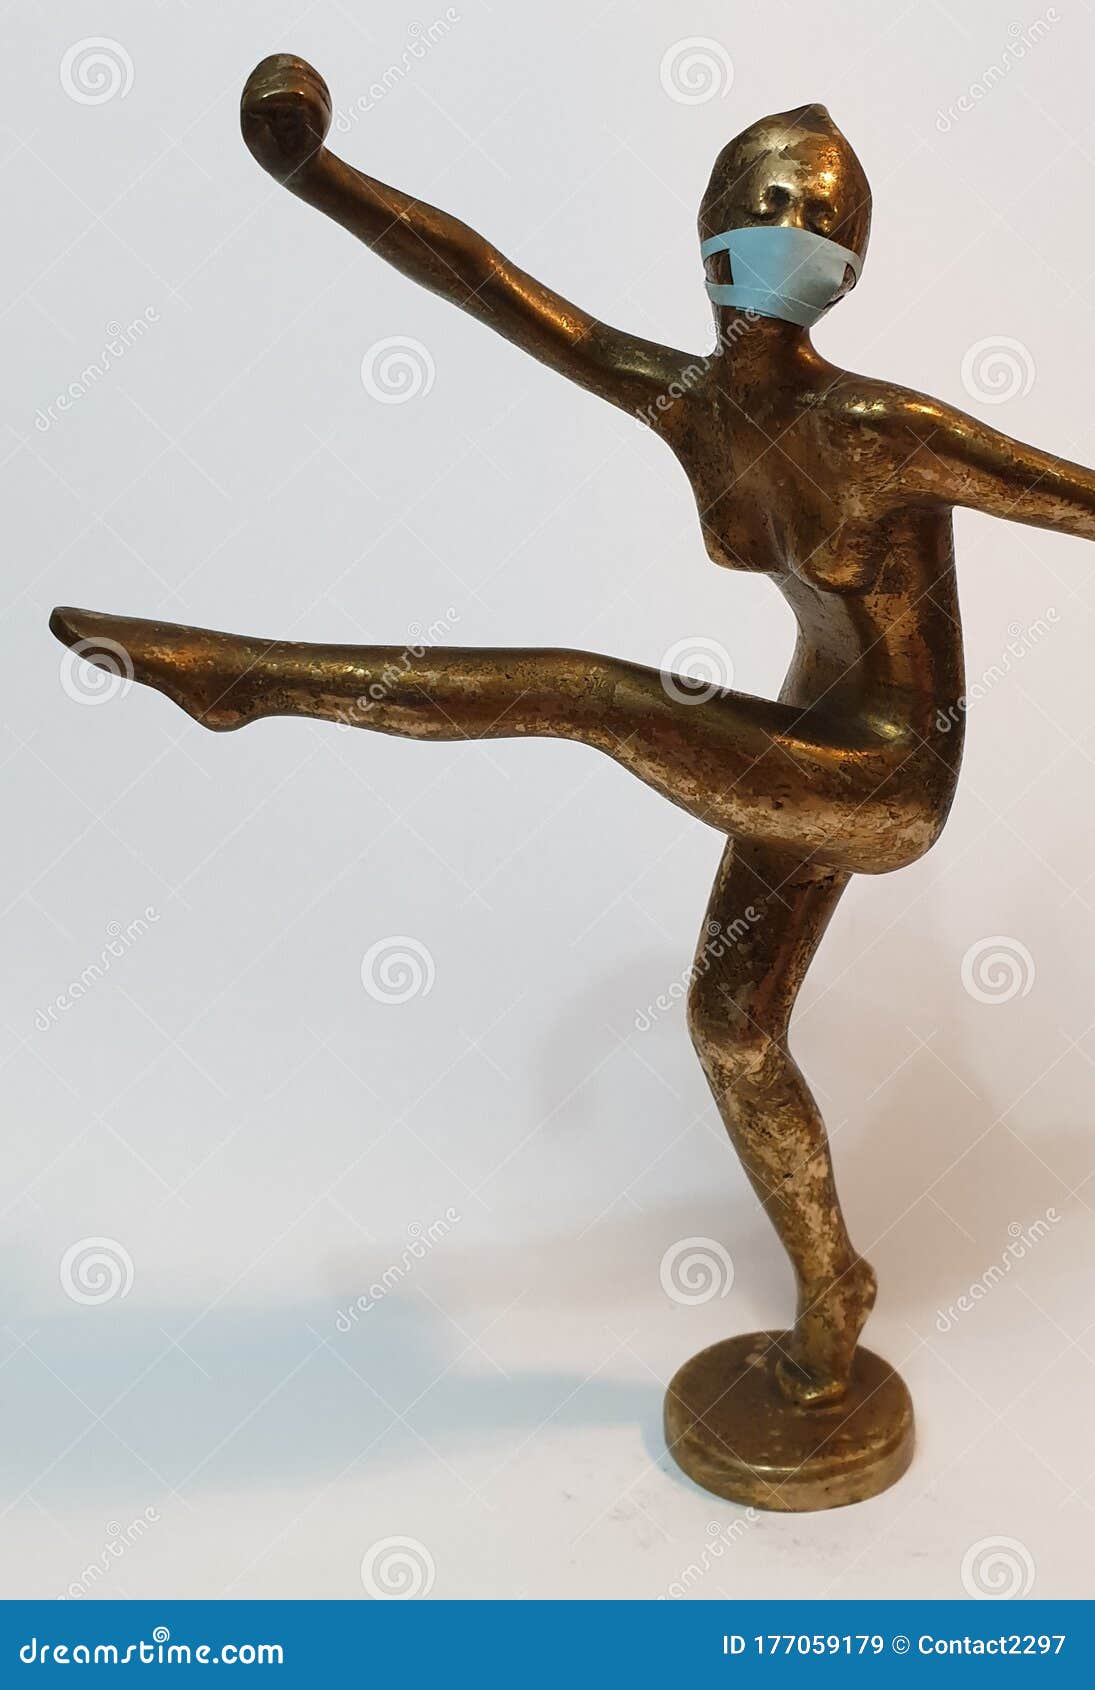 coronavirus metaphore vintage brass statue dancer girl